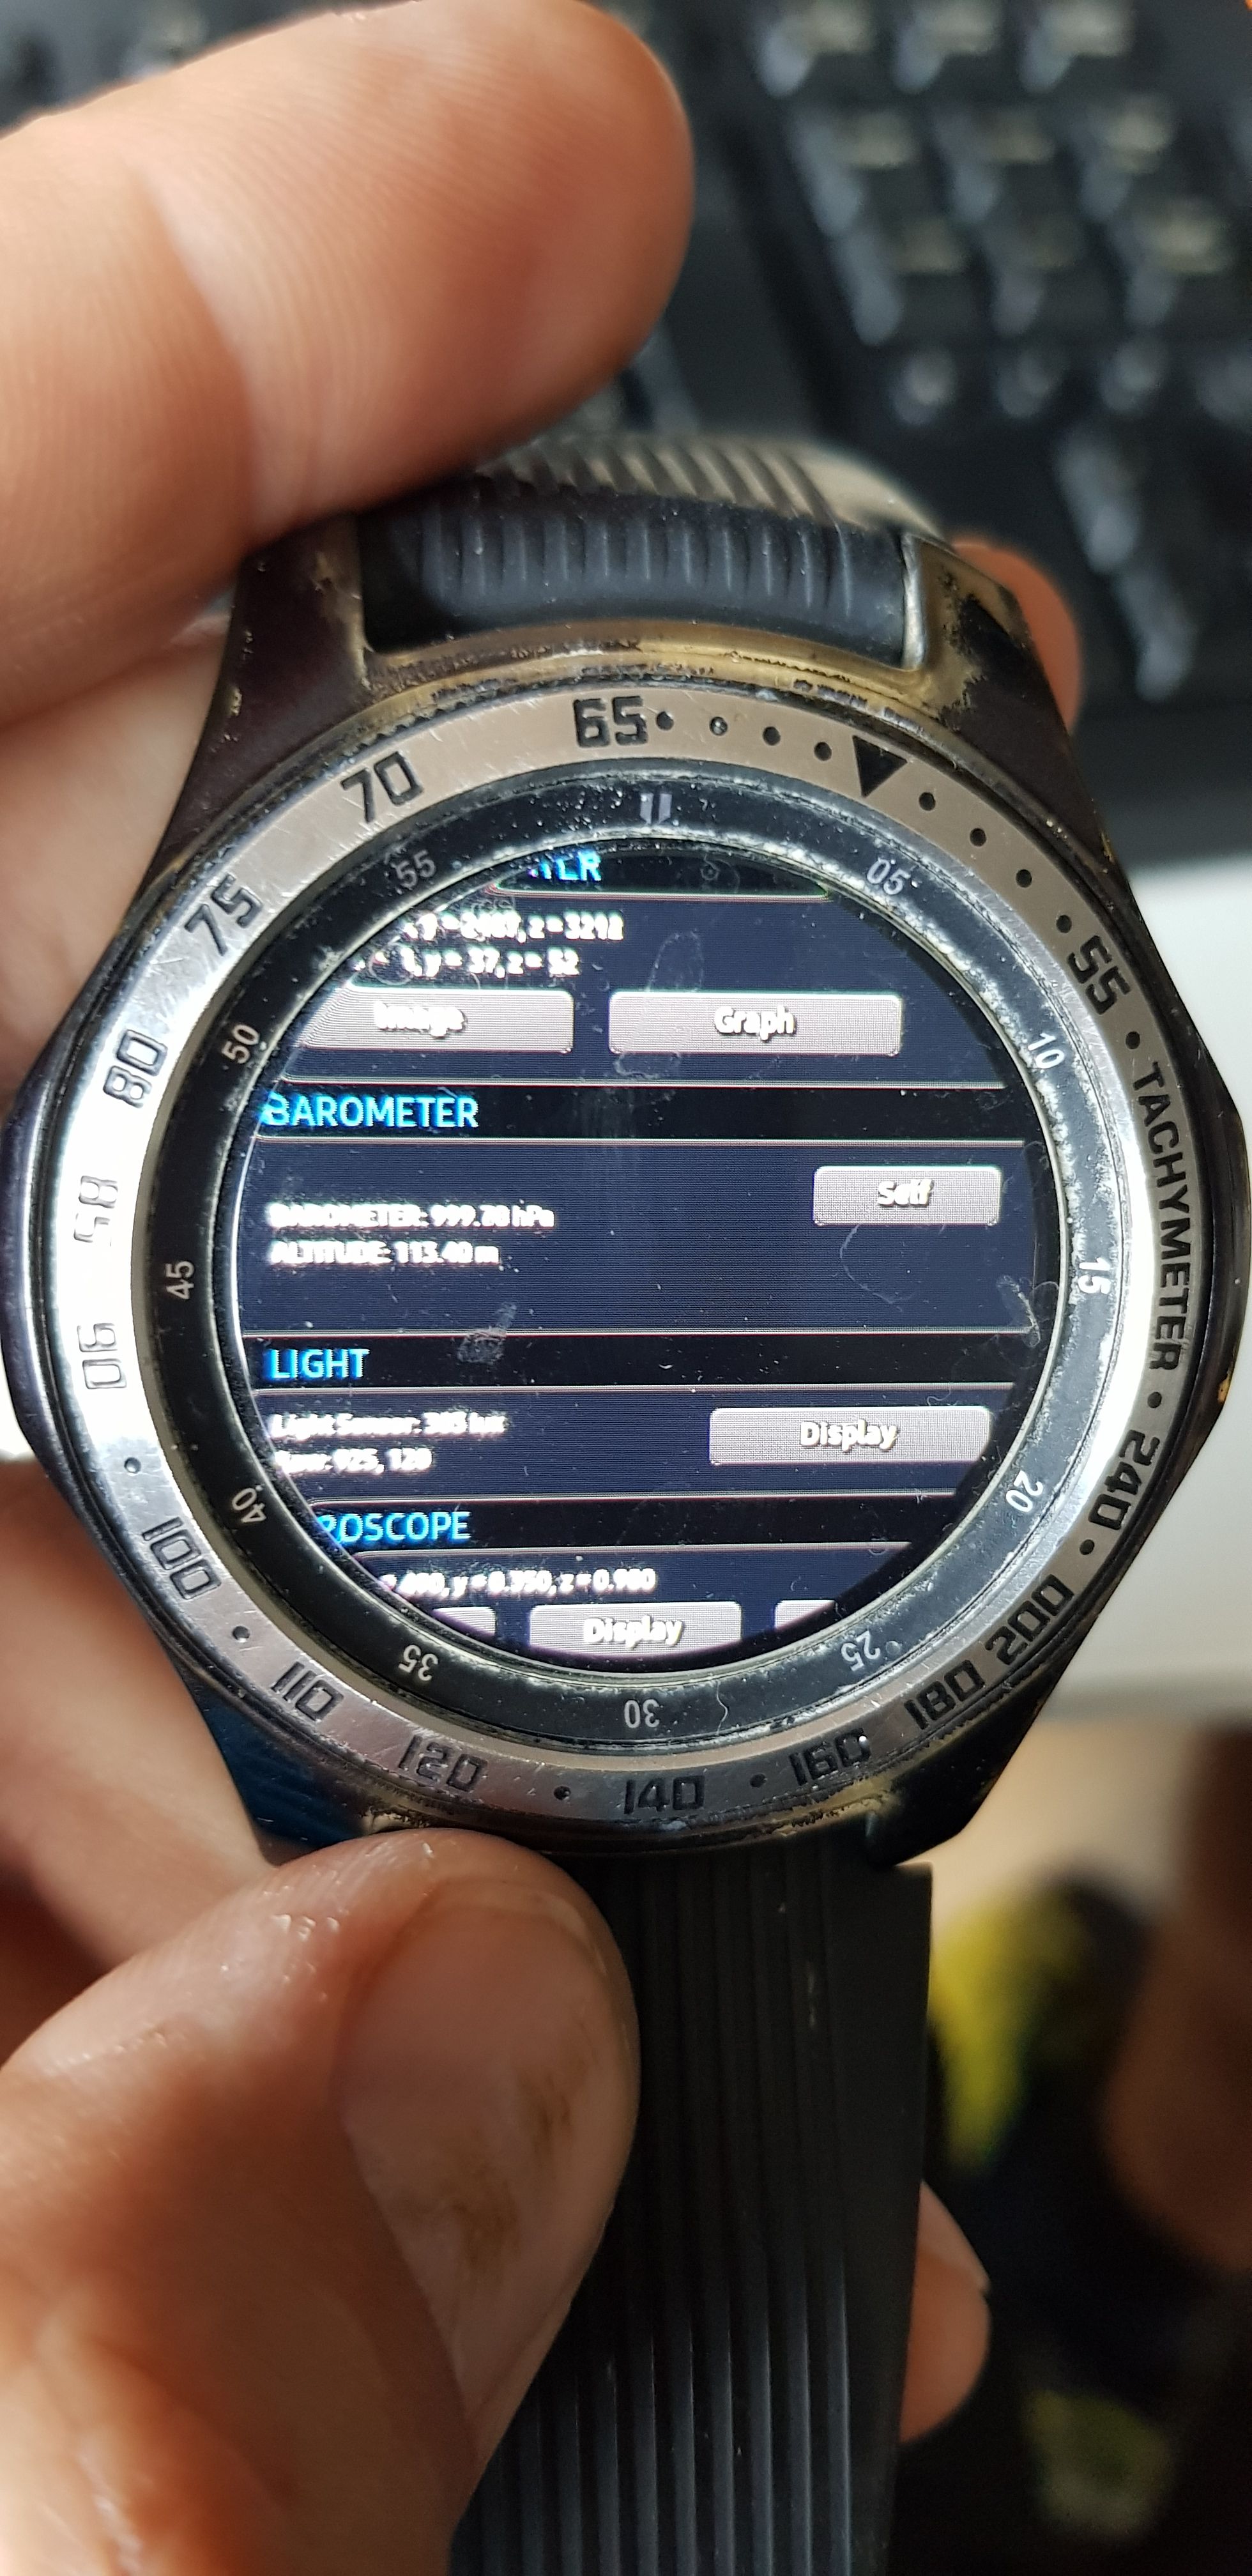 Galaxy Watch sensors stopped working - Samsung Community